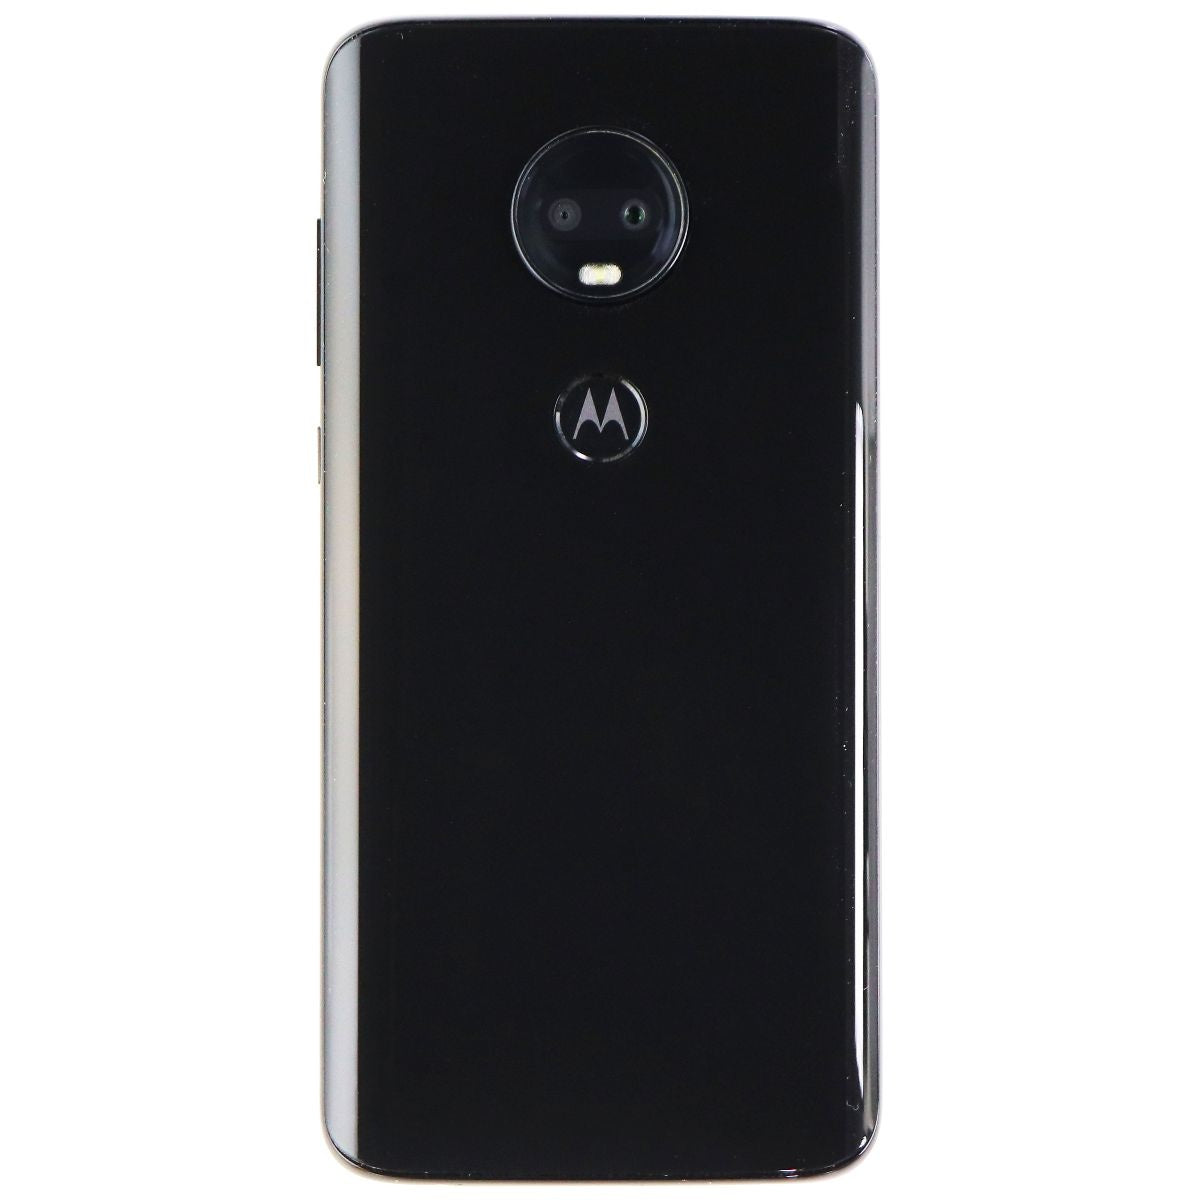 Motorola Moto G7 Smartphone (XT1962-1) GSM + Verizon - 64GB / Black Cell Phones & Smartphones Motorola    - Simple Cell Bulk Wholesale Pricing - USA Seller